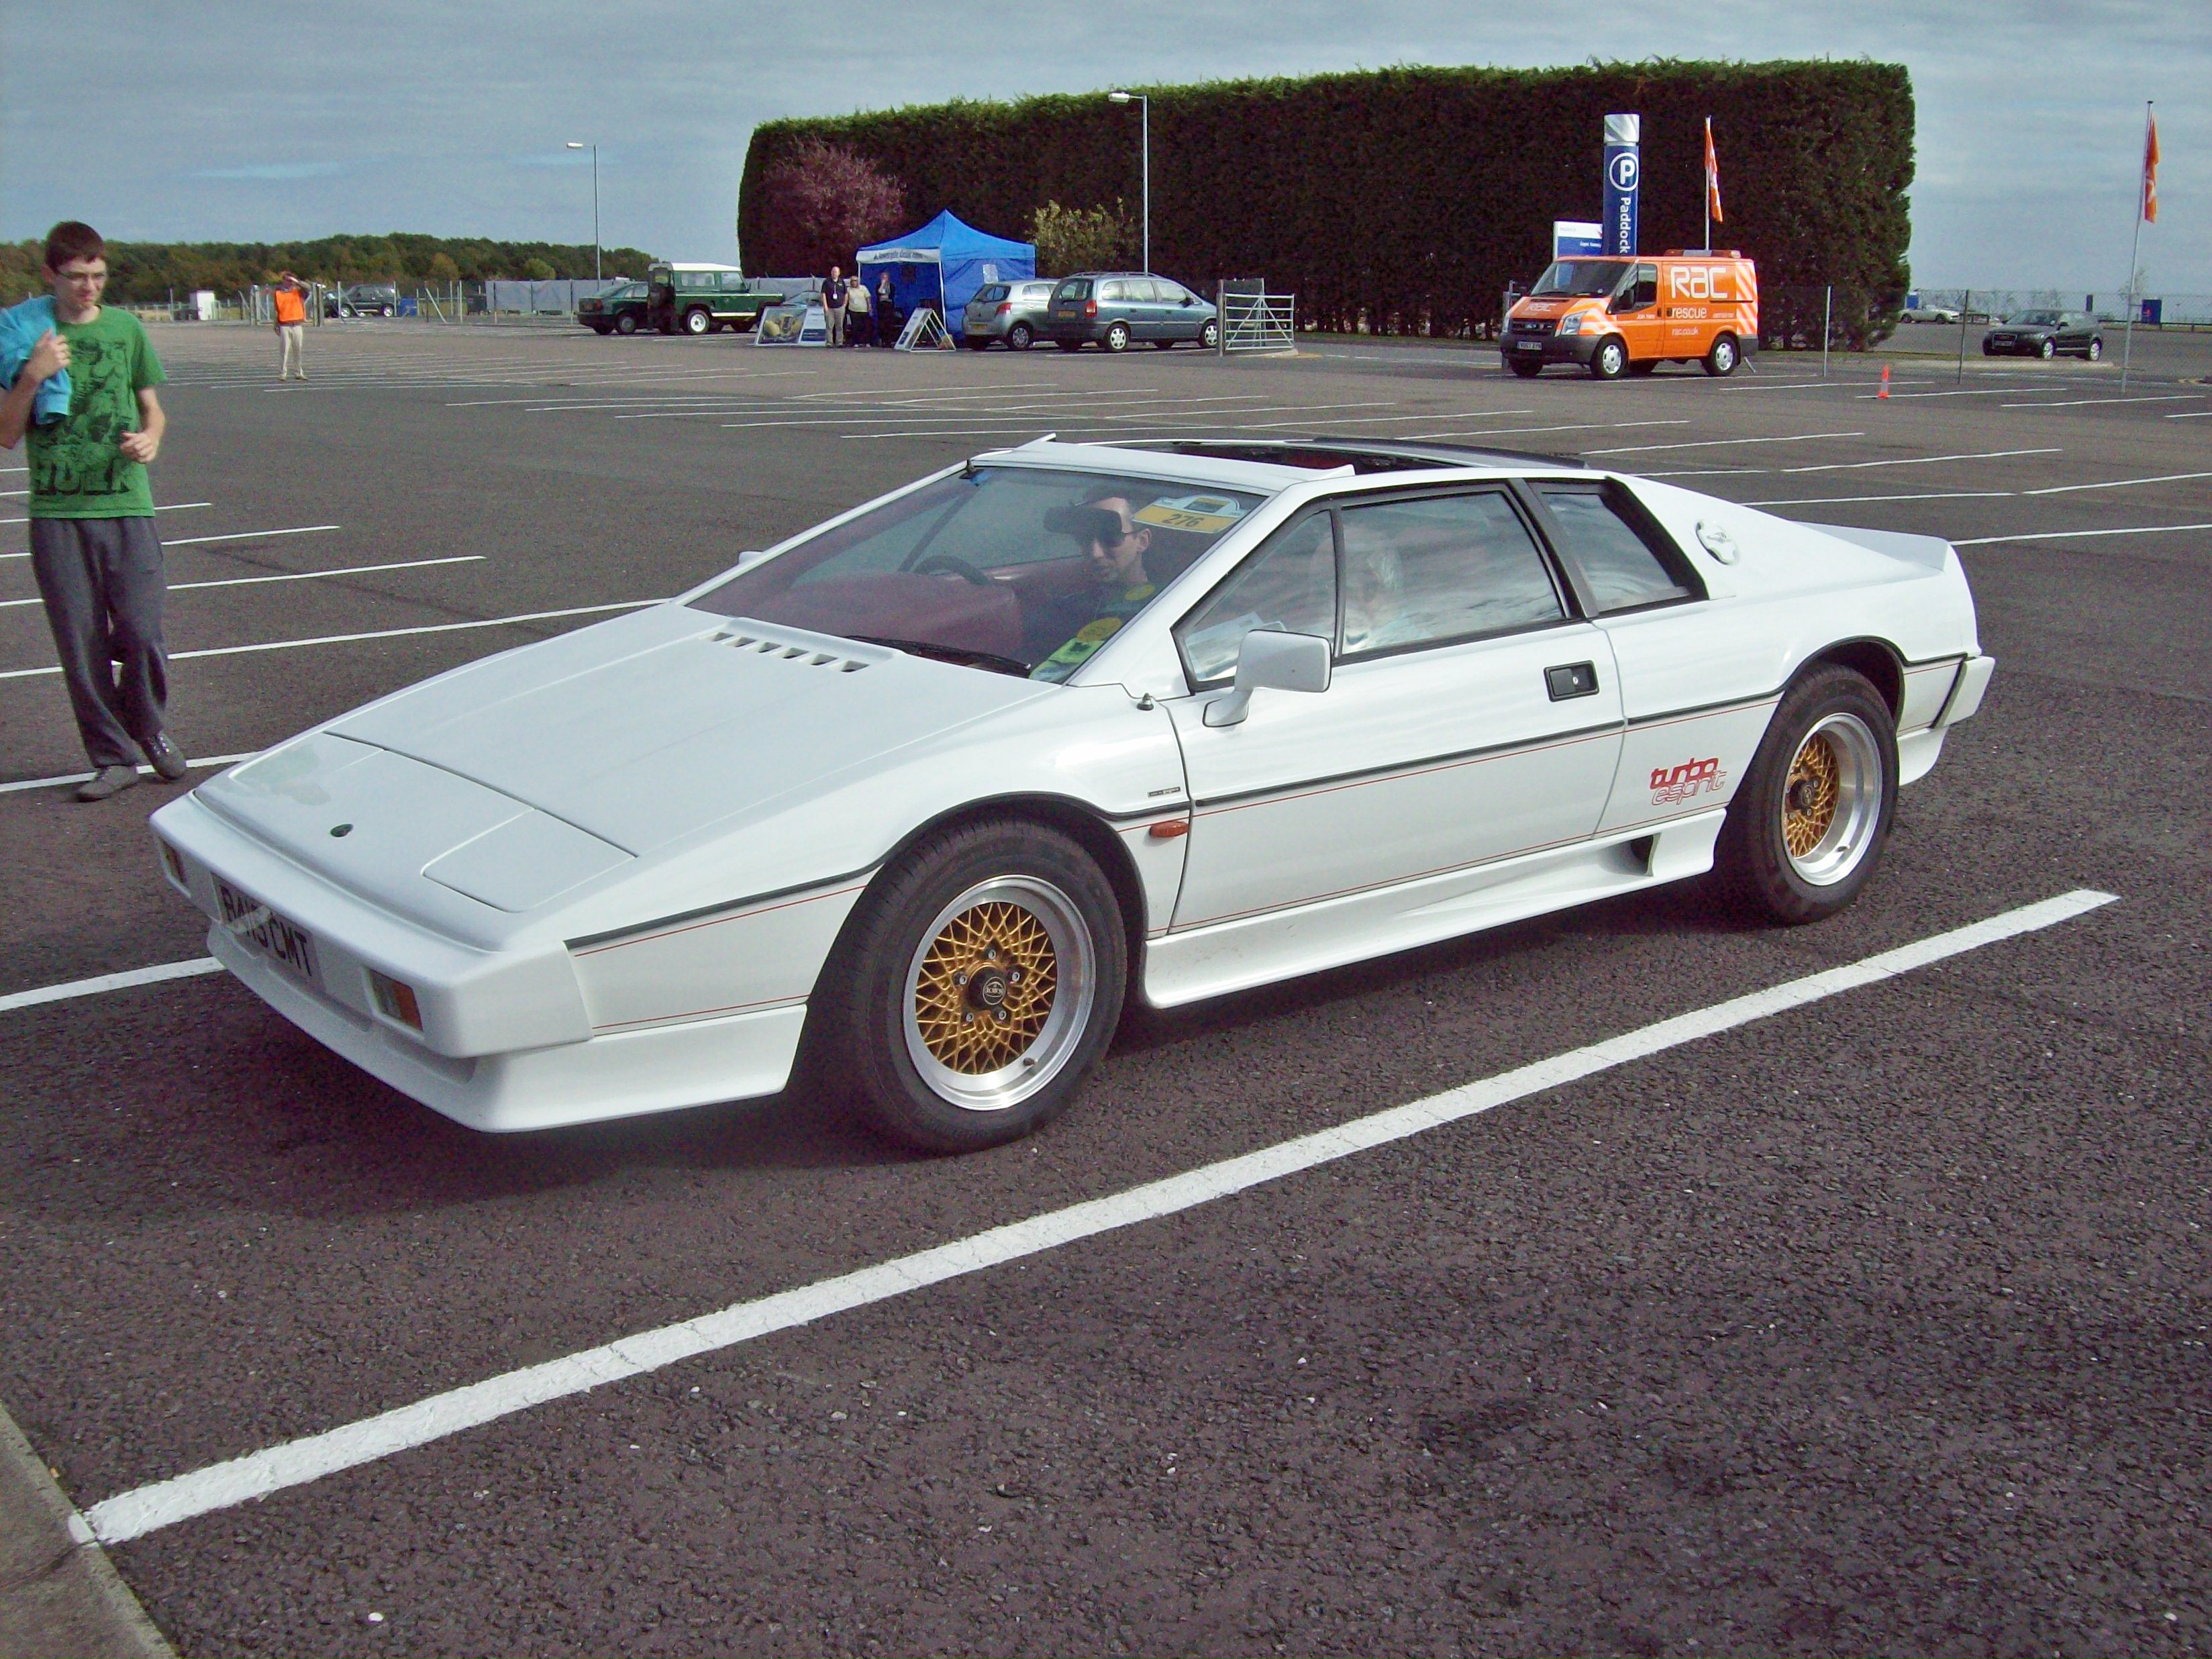 127 Lotus Esprit Turbo (1985) | Flickr - Photo Sharing!